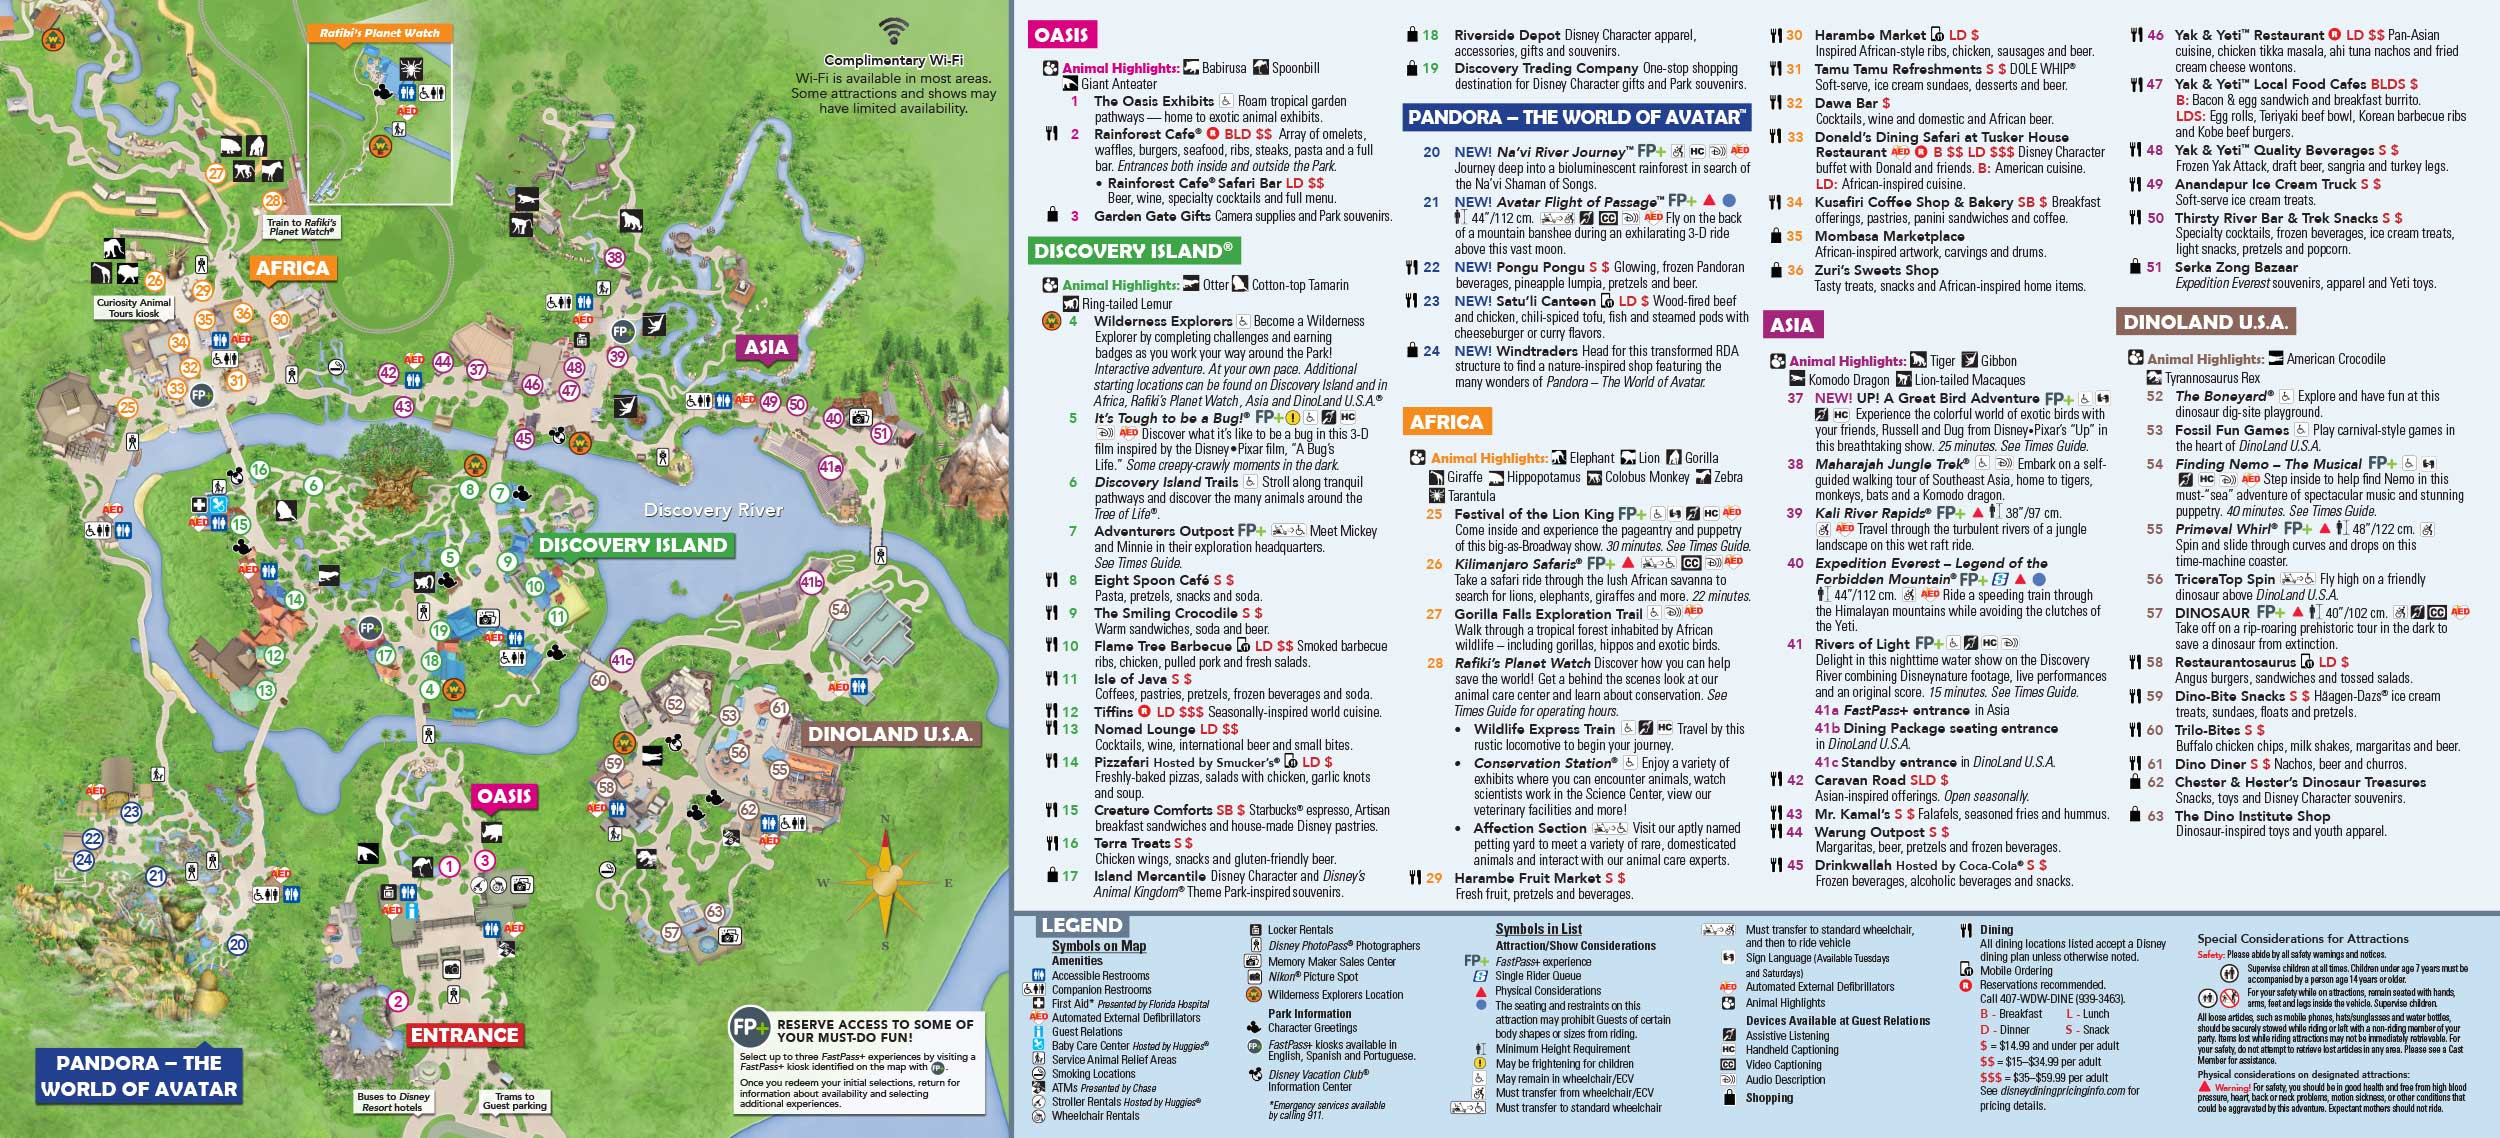 Printable Disneyland Map 2018 Awesome Disney S Animal Kingdom Map Theme Park Map